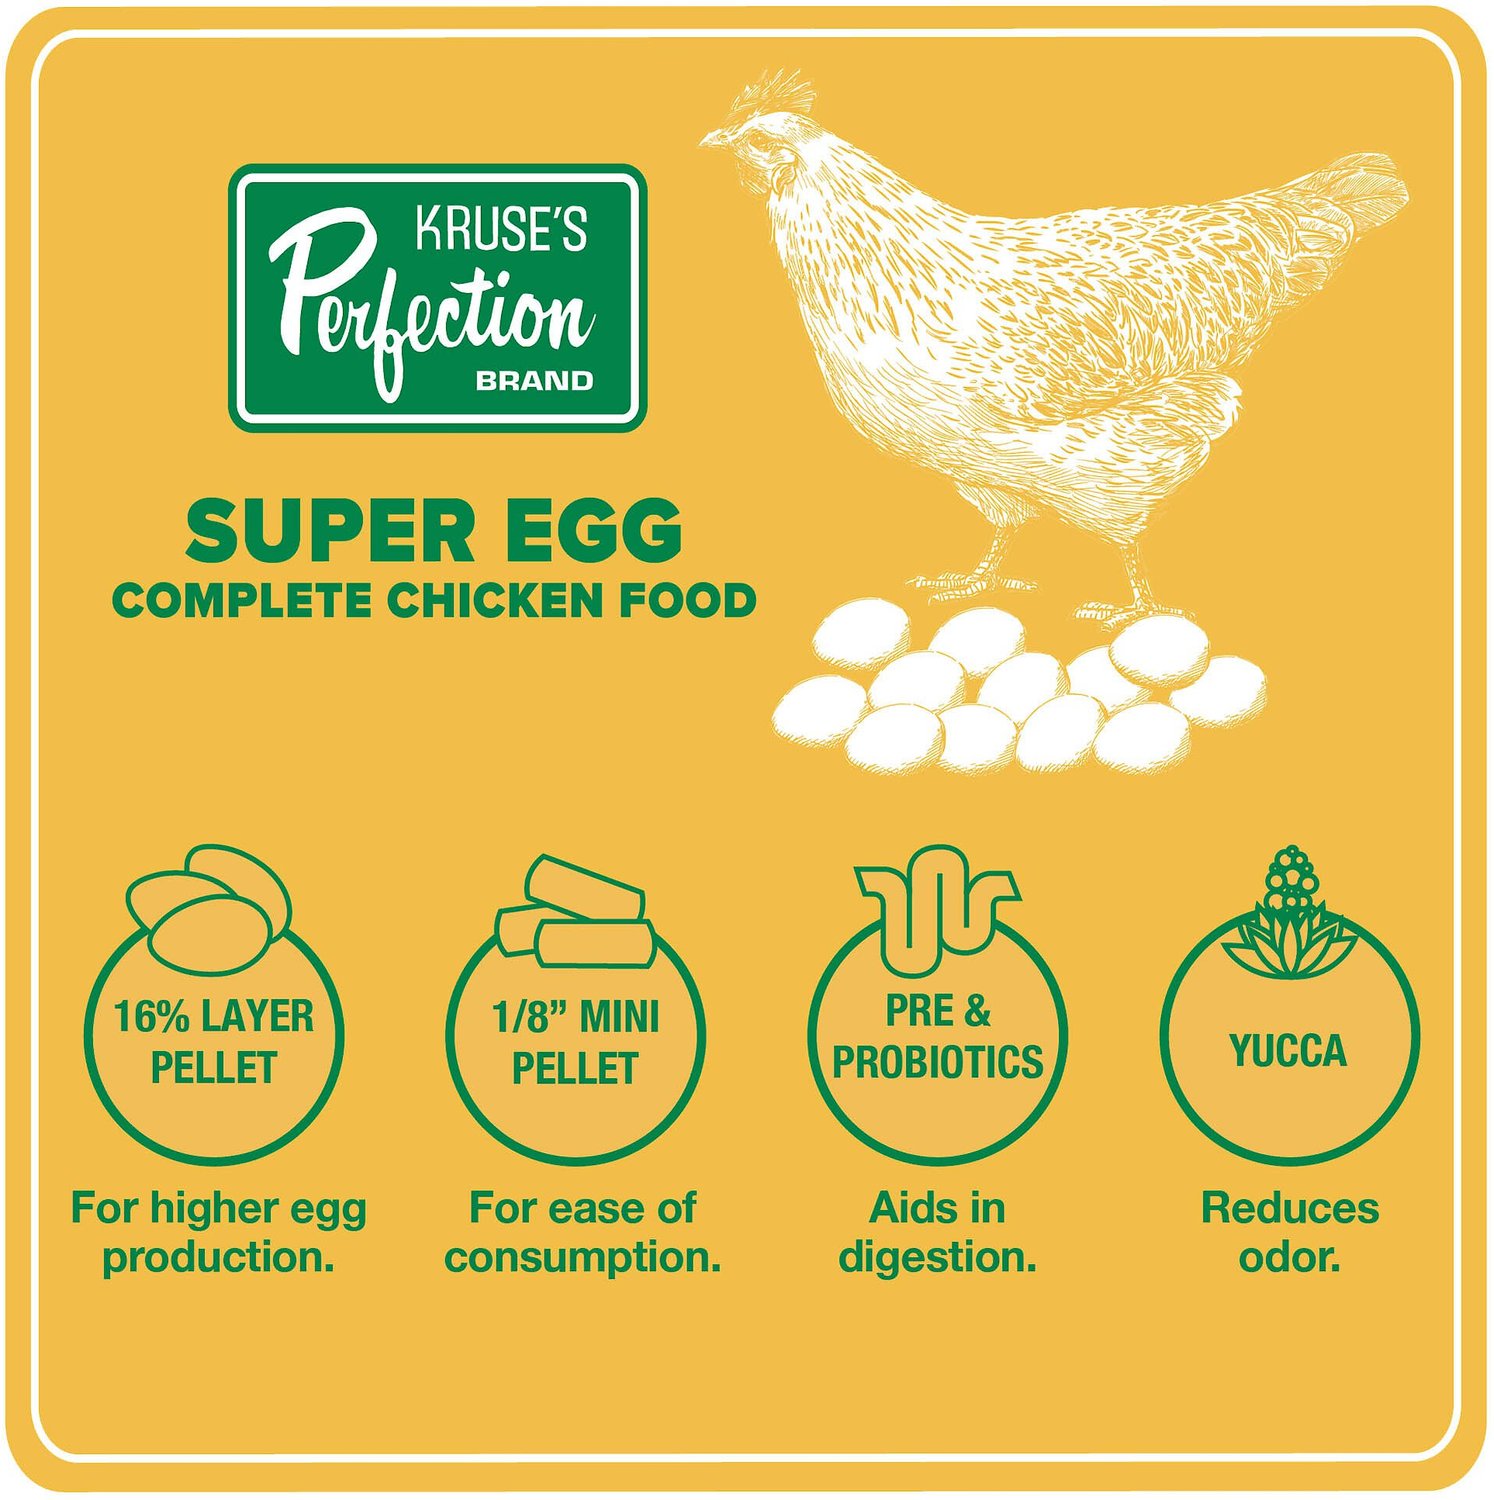 Complete whole. Super Egg. Perfect brand.